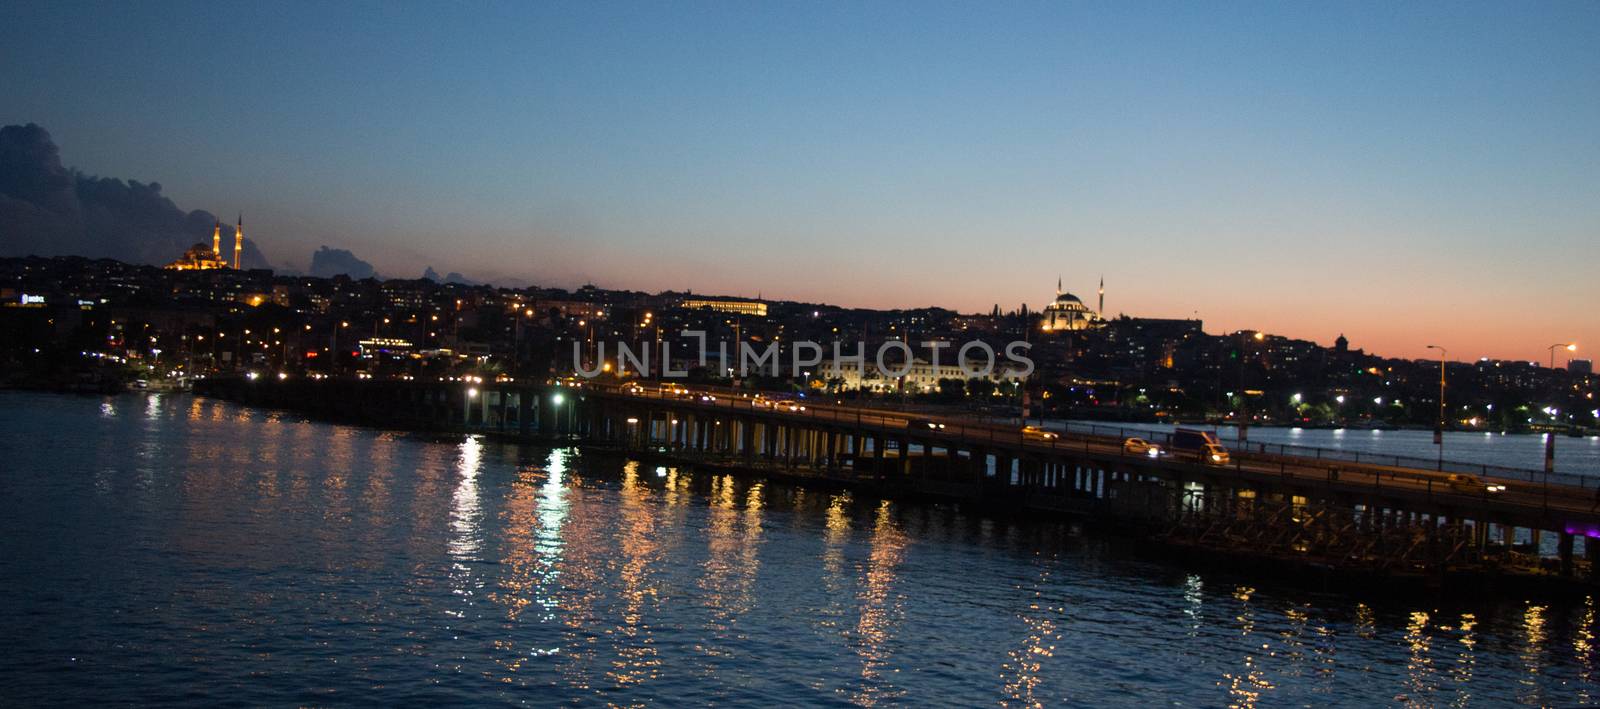 Ataturk bridge on Golden Horn at night by berkay